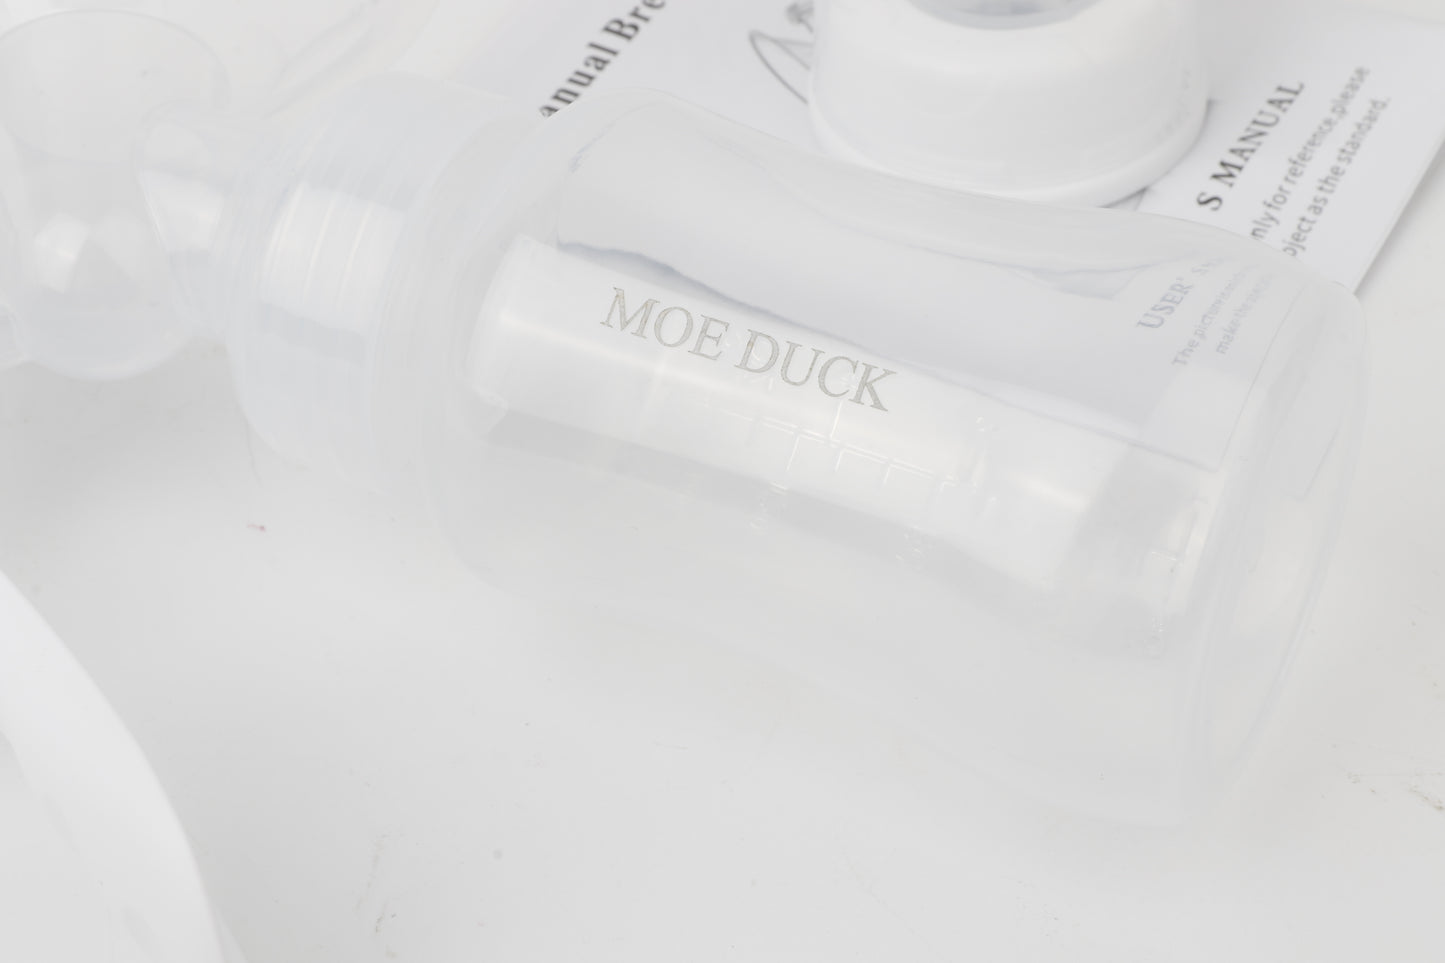 Moe Duck Breast pumps